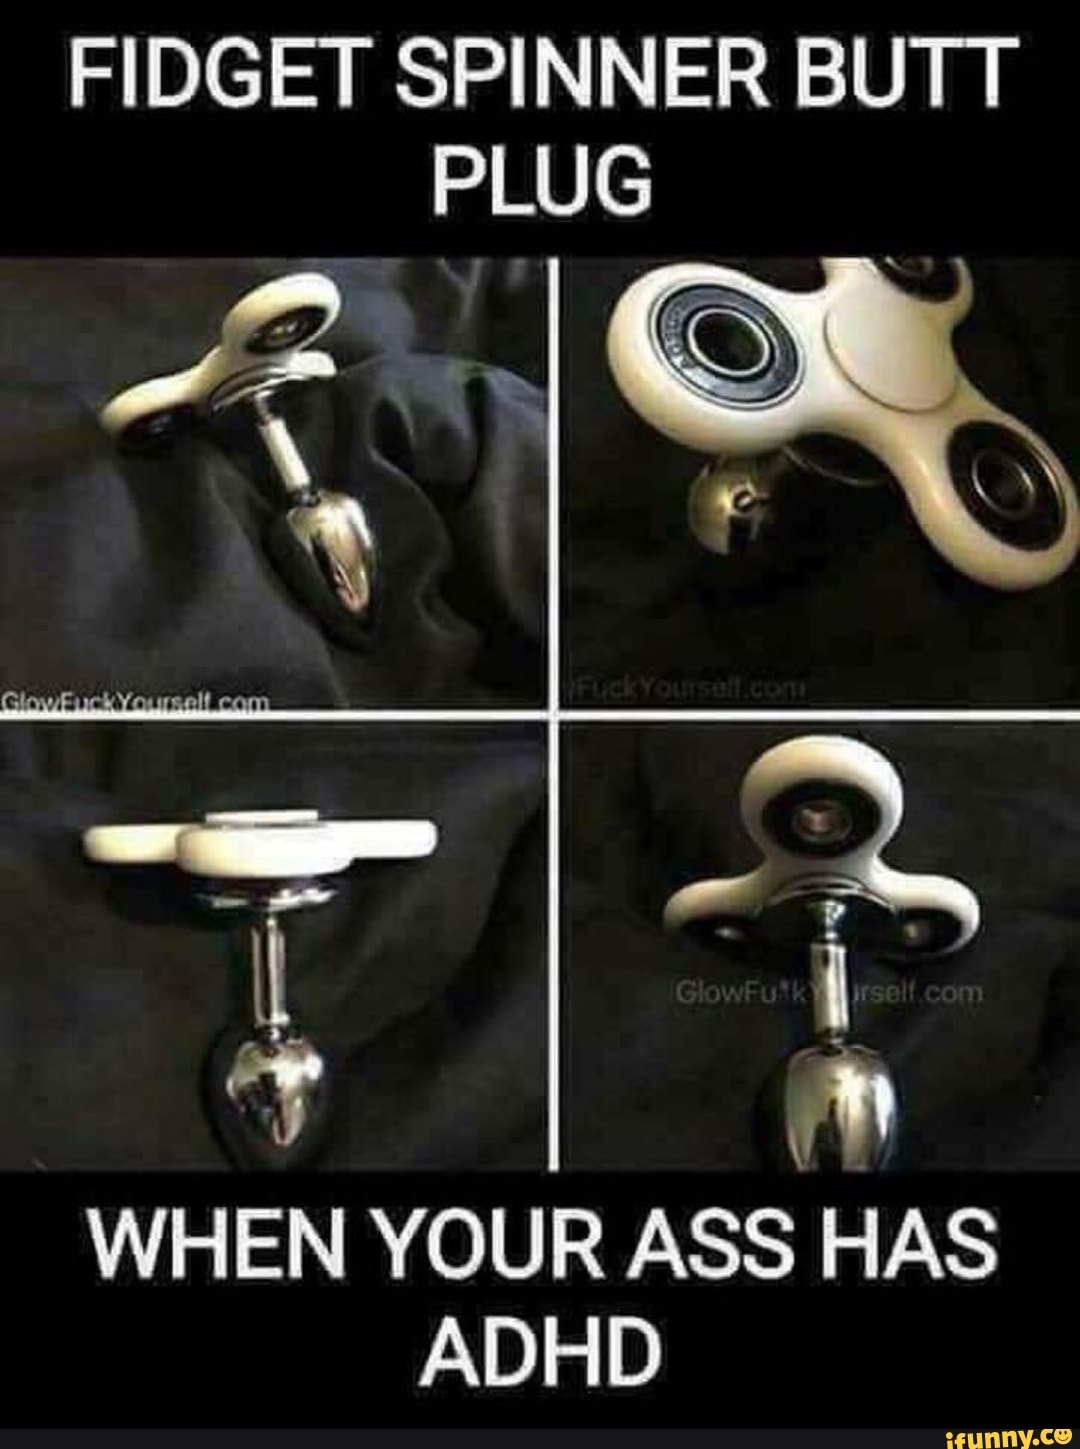 Butt plug spinner FYI, You